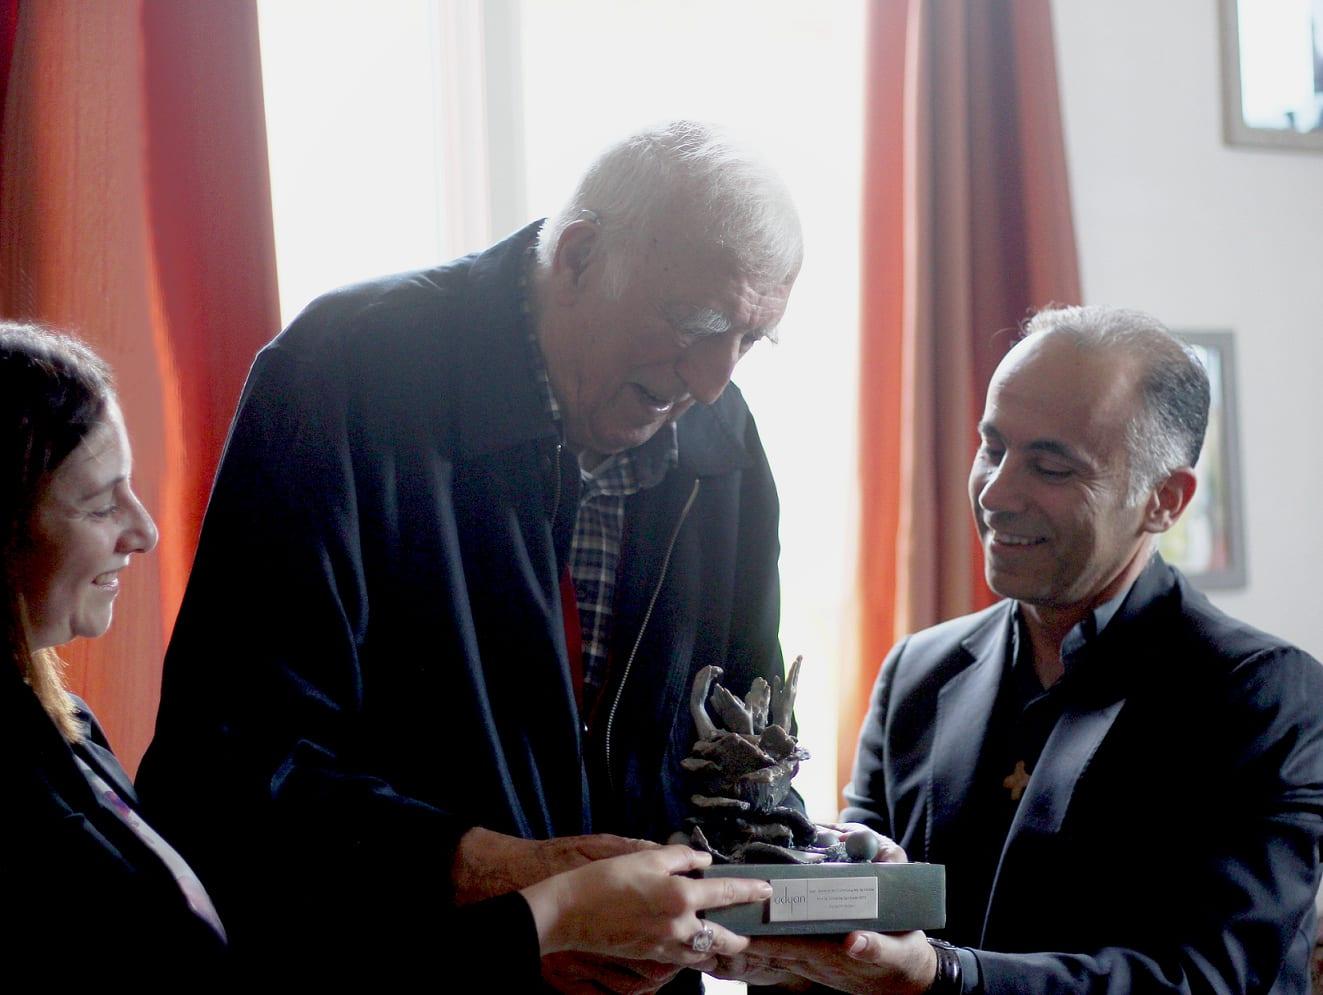 L’Arche founder Jean Vanier receives spiritual solidarity award